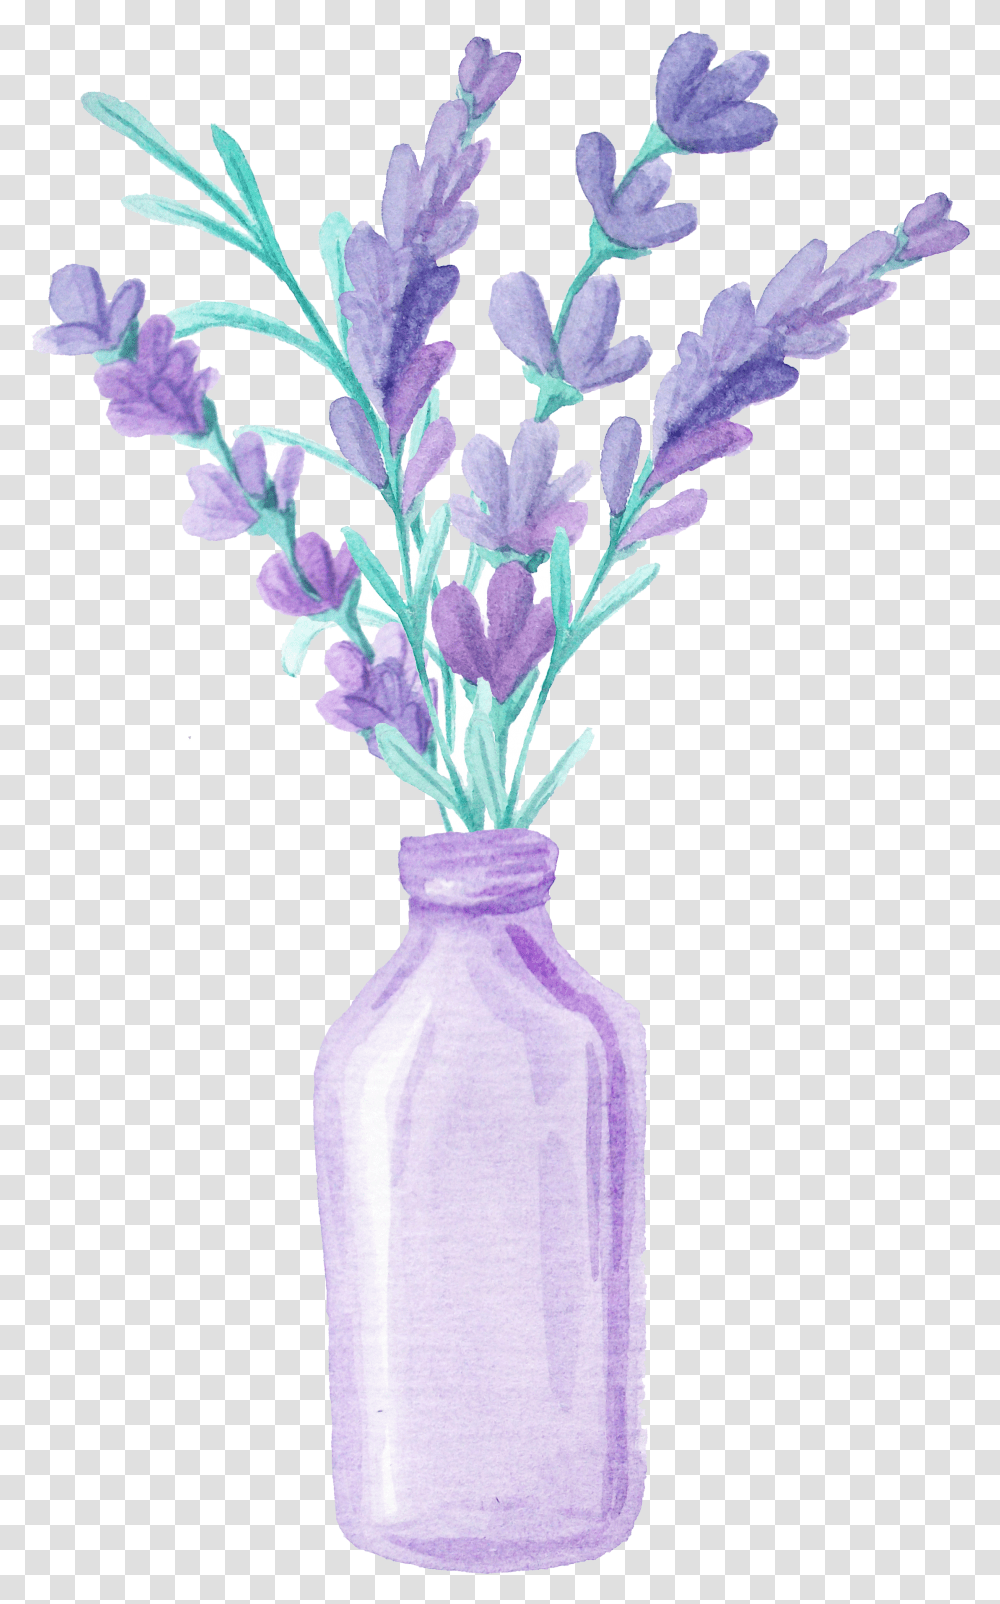 Watercolors Of Flowers In Vase Transparent Png